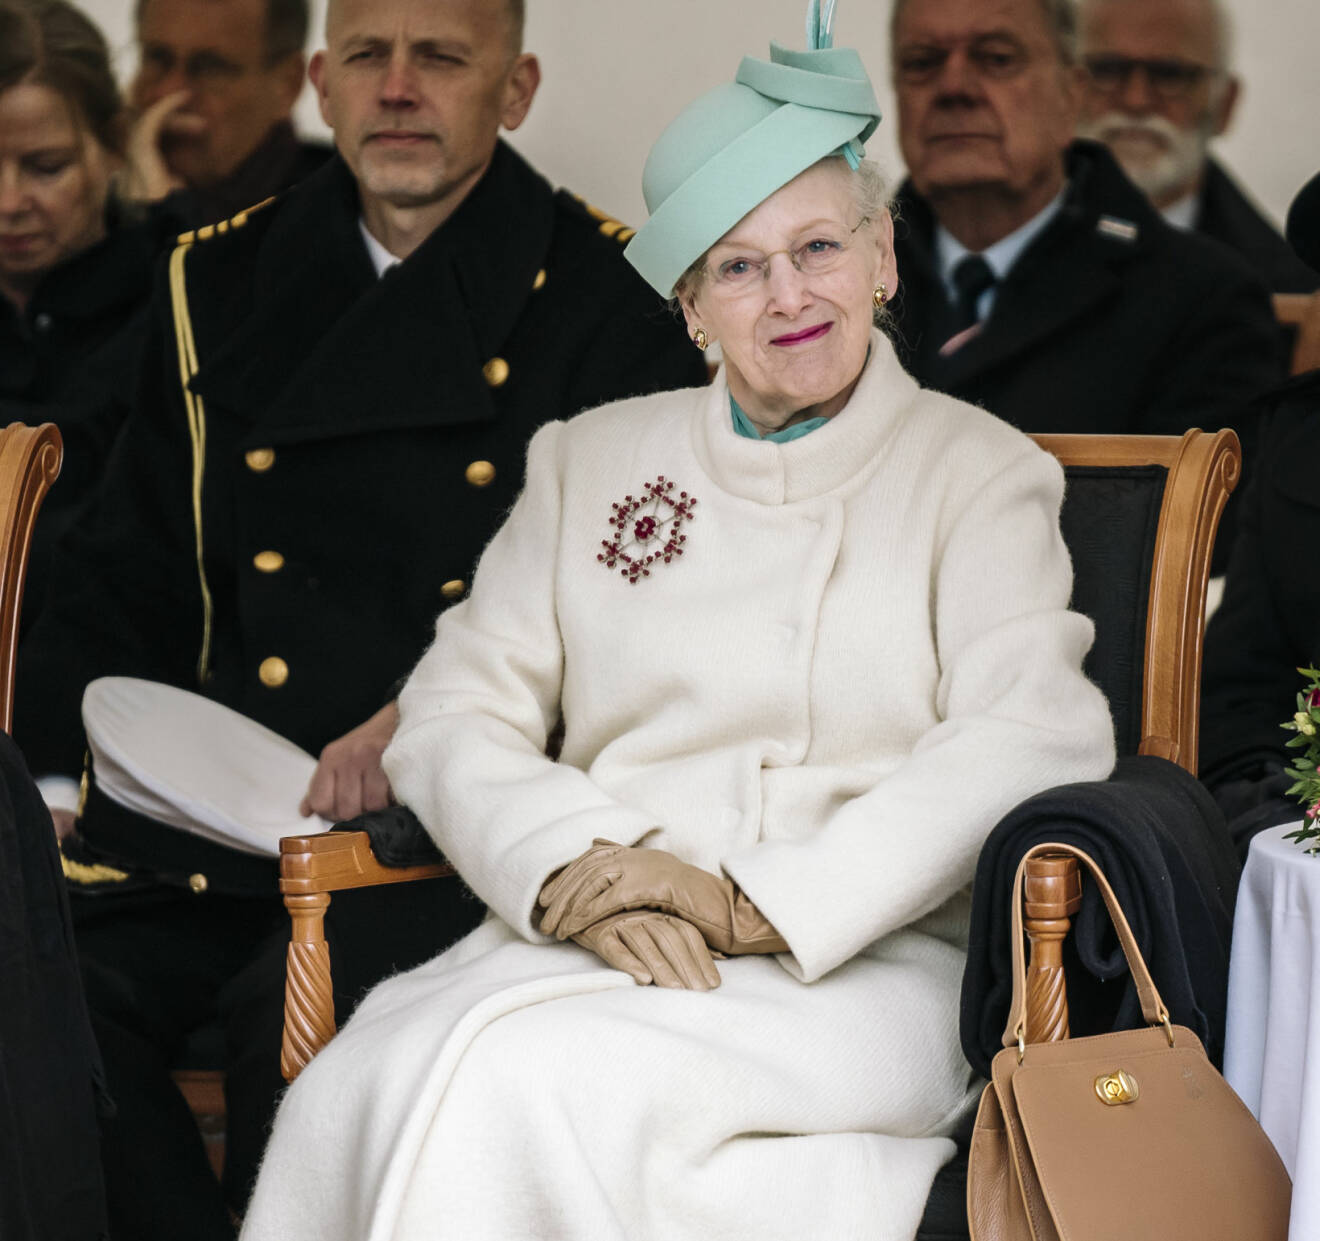 Drottning Margrethe